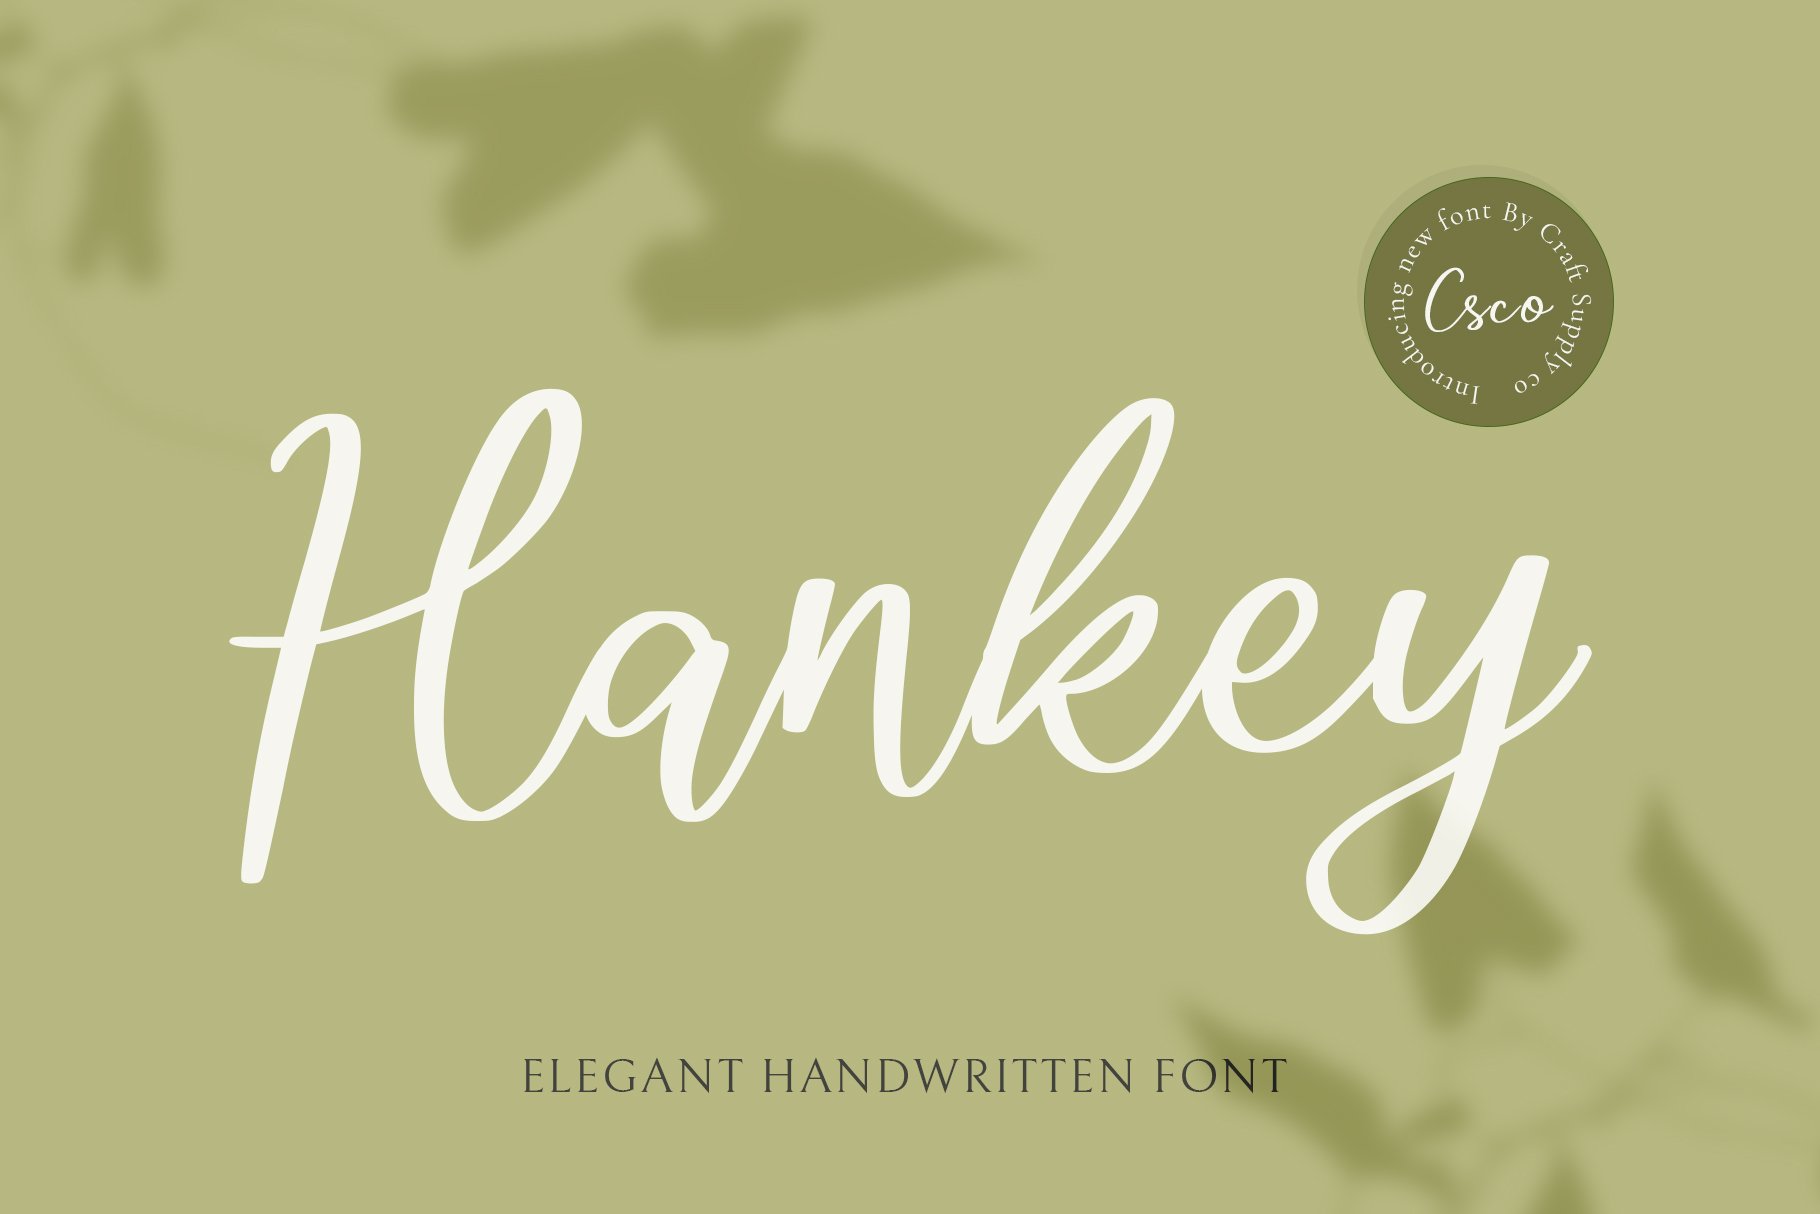 Hankey - Handwritten Font cover image.